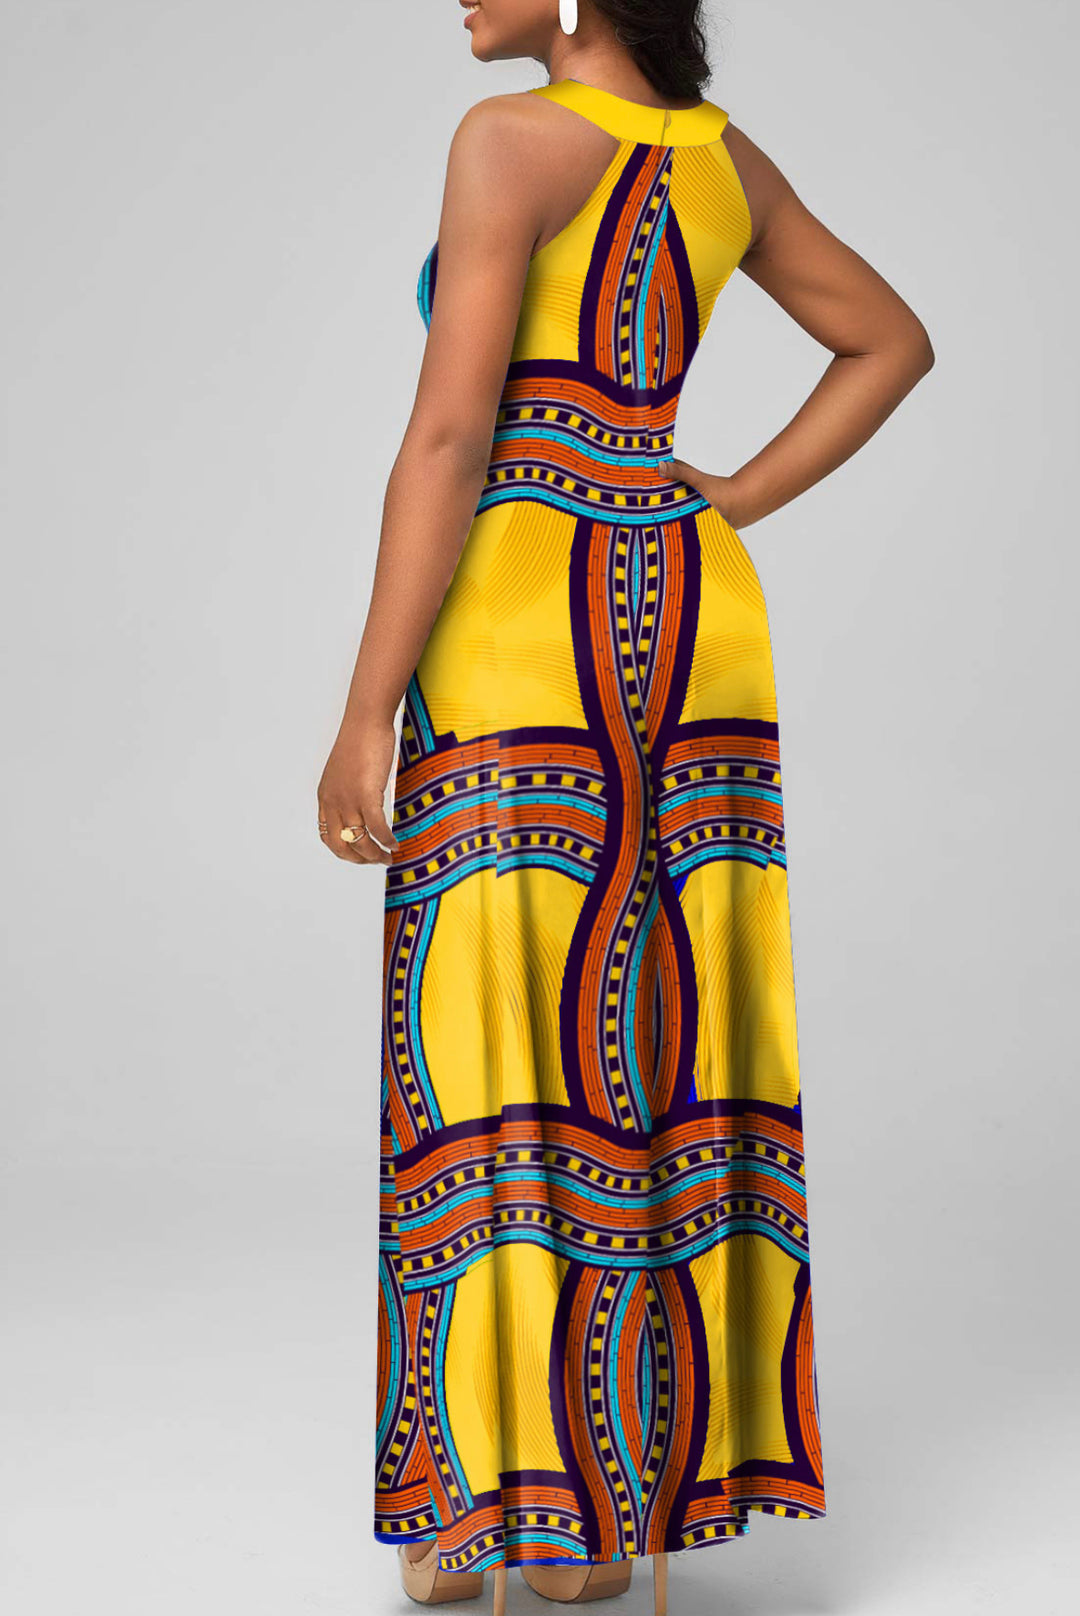 Beautiful Cage Neck Tribal Print Yellow Sleeveless Maxi Dress